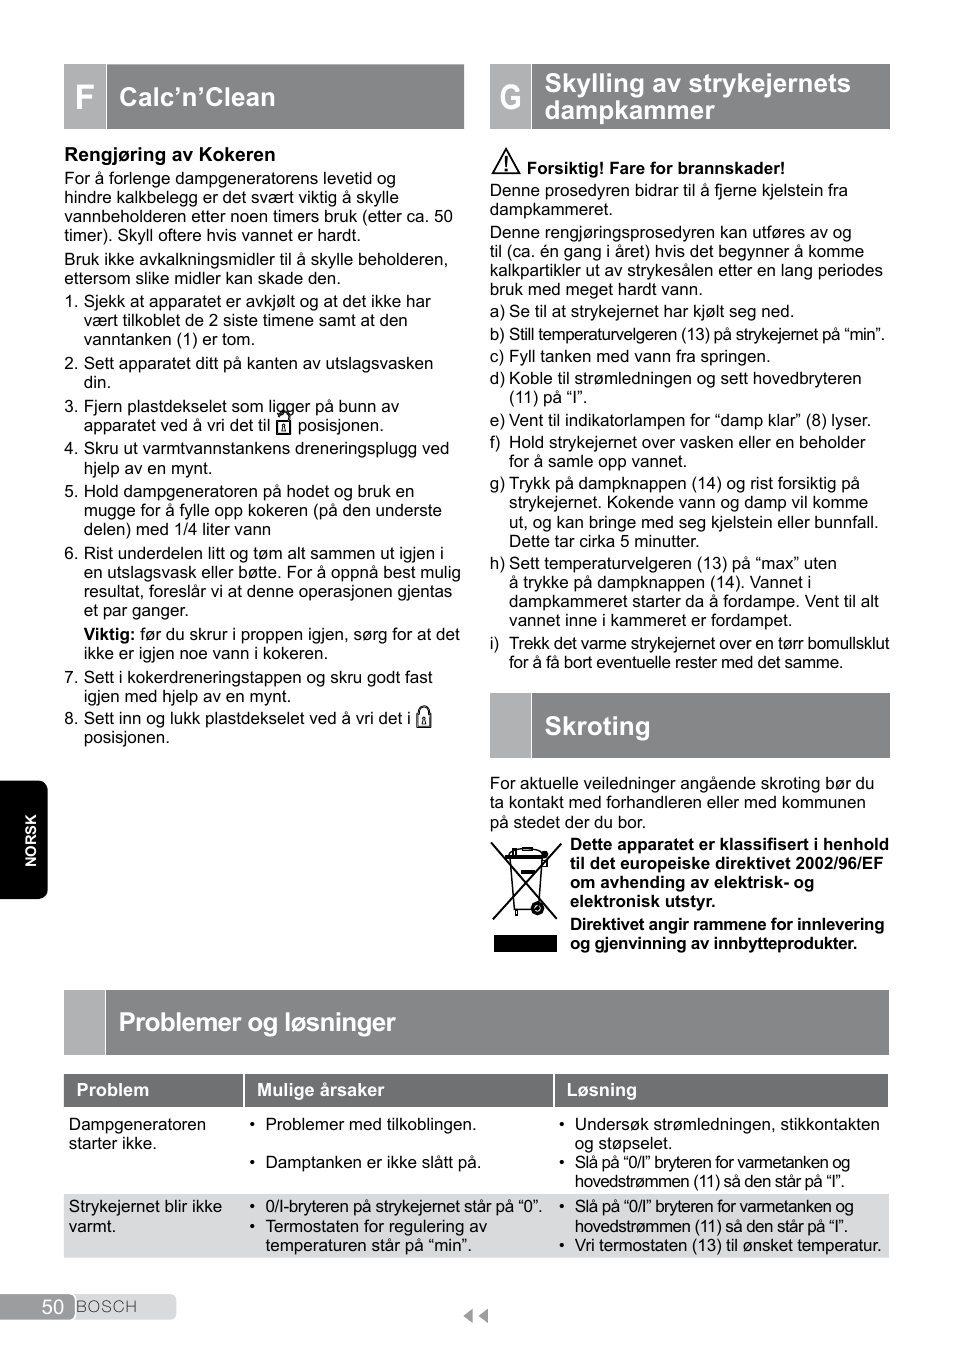 G skylling av strykejernets dampkammer, Skroting, Problemer og løsninger | Bosch  TDS2011 User Manual | Page 50 / 136